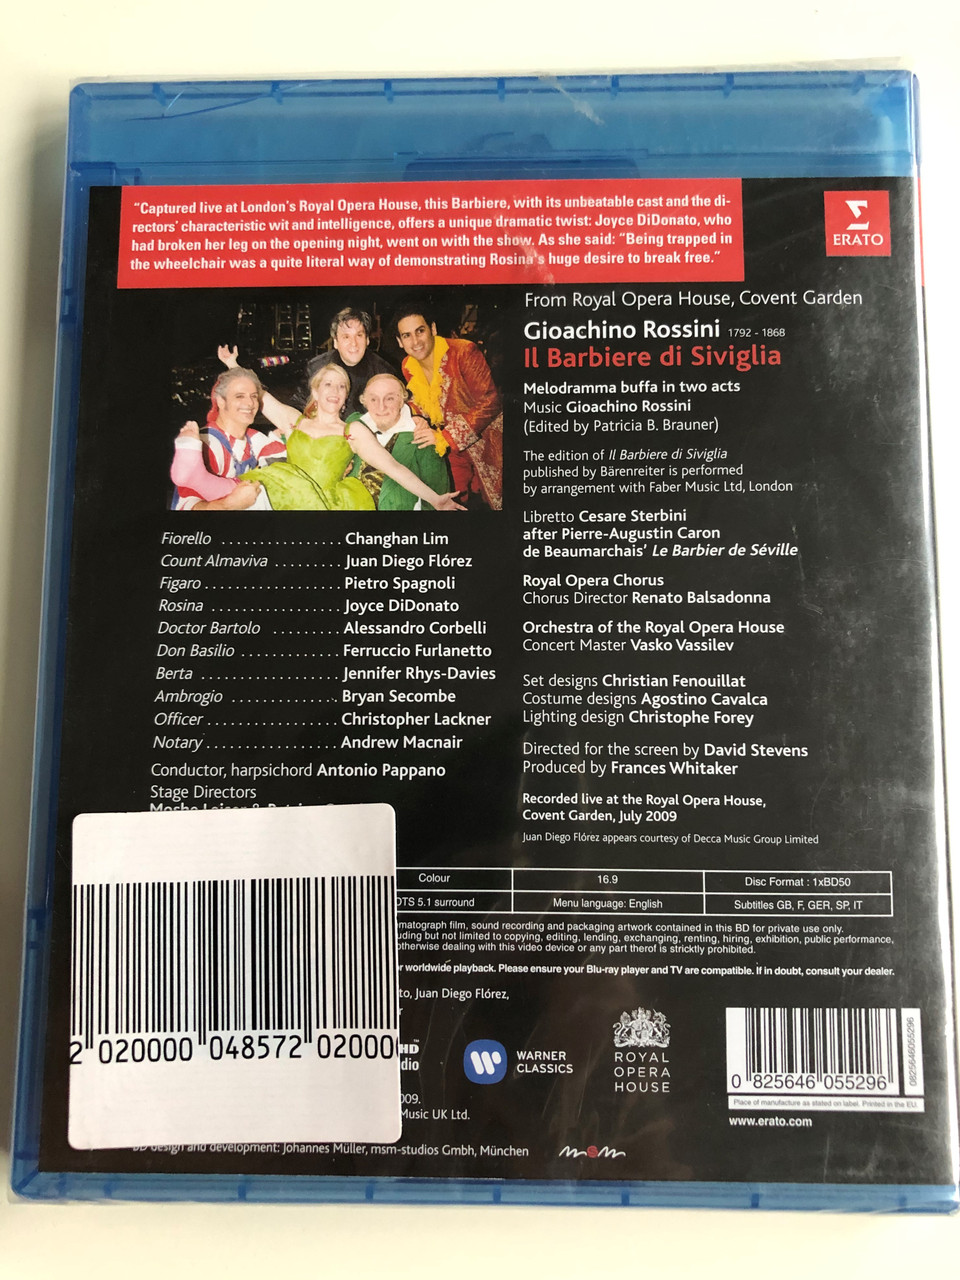 Rossini - Il Barbiere di Siviglia Bluray Disc 2009 / Directed by David  Stevens / Recorded live at the Royal Opera House / Conducted by Antonio  Pappano / Royal Opera Chorus, Orchestra of the Royal Opera House / Erato -  bibleinmylanguage